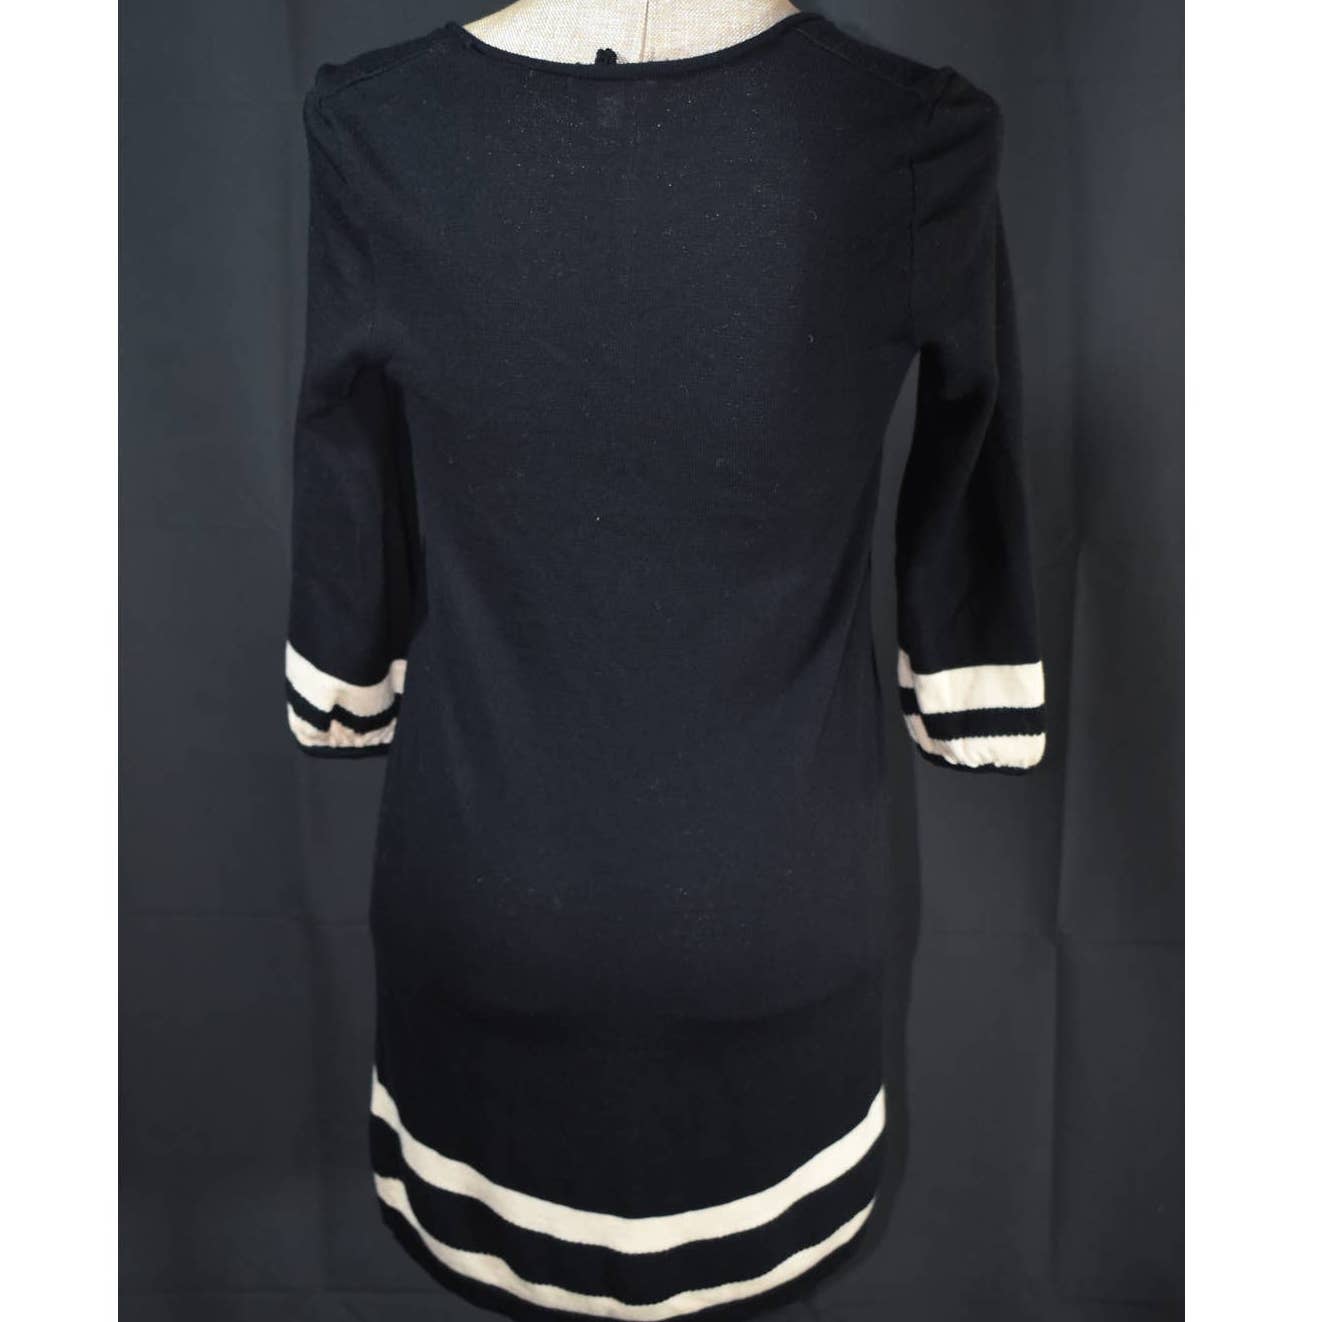 Lilly Pulitzer 100% Merino Wool 3/4 Sleeve Sweater Dress- S